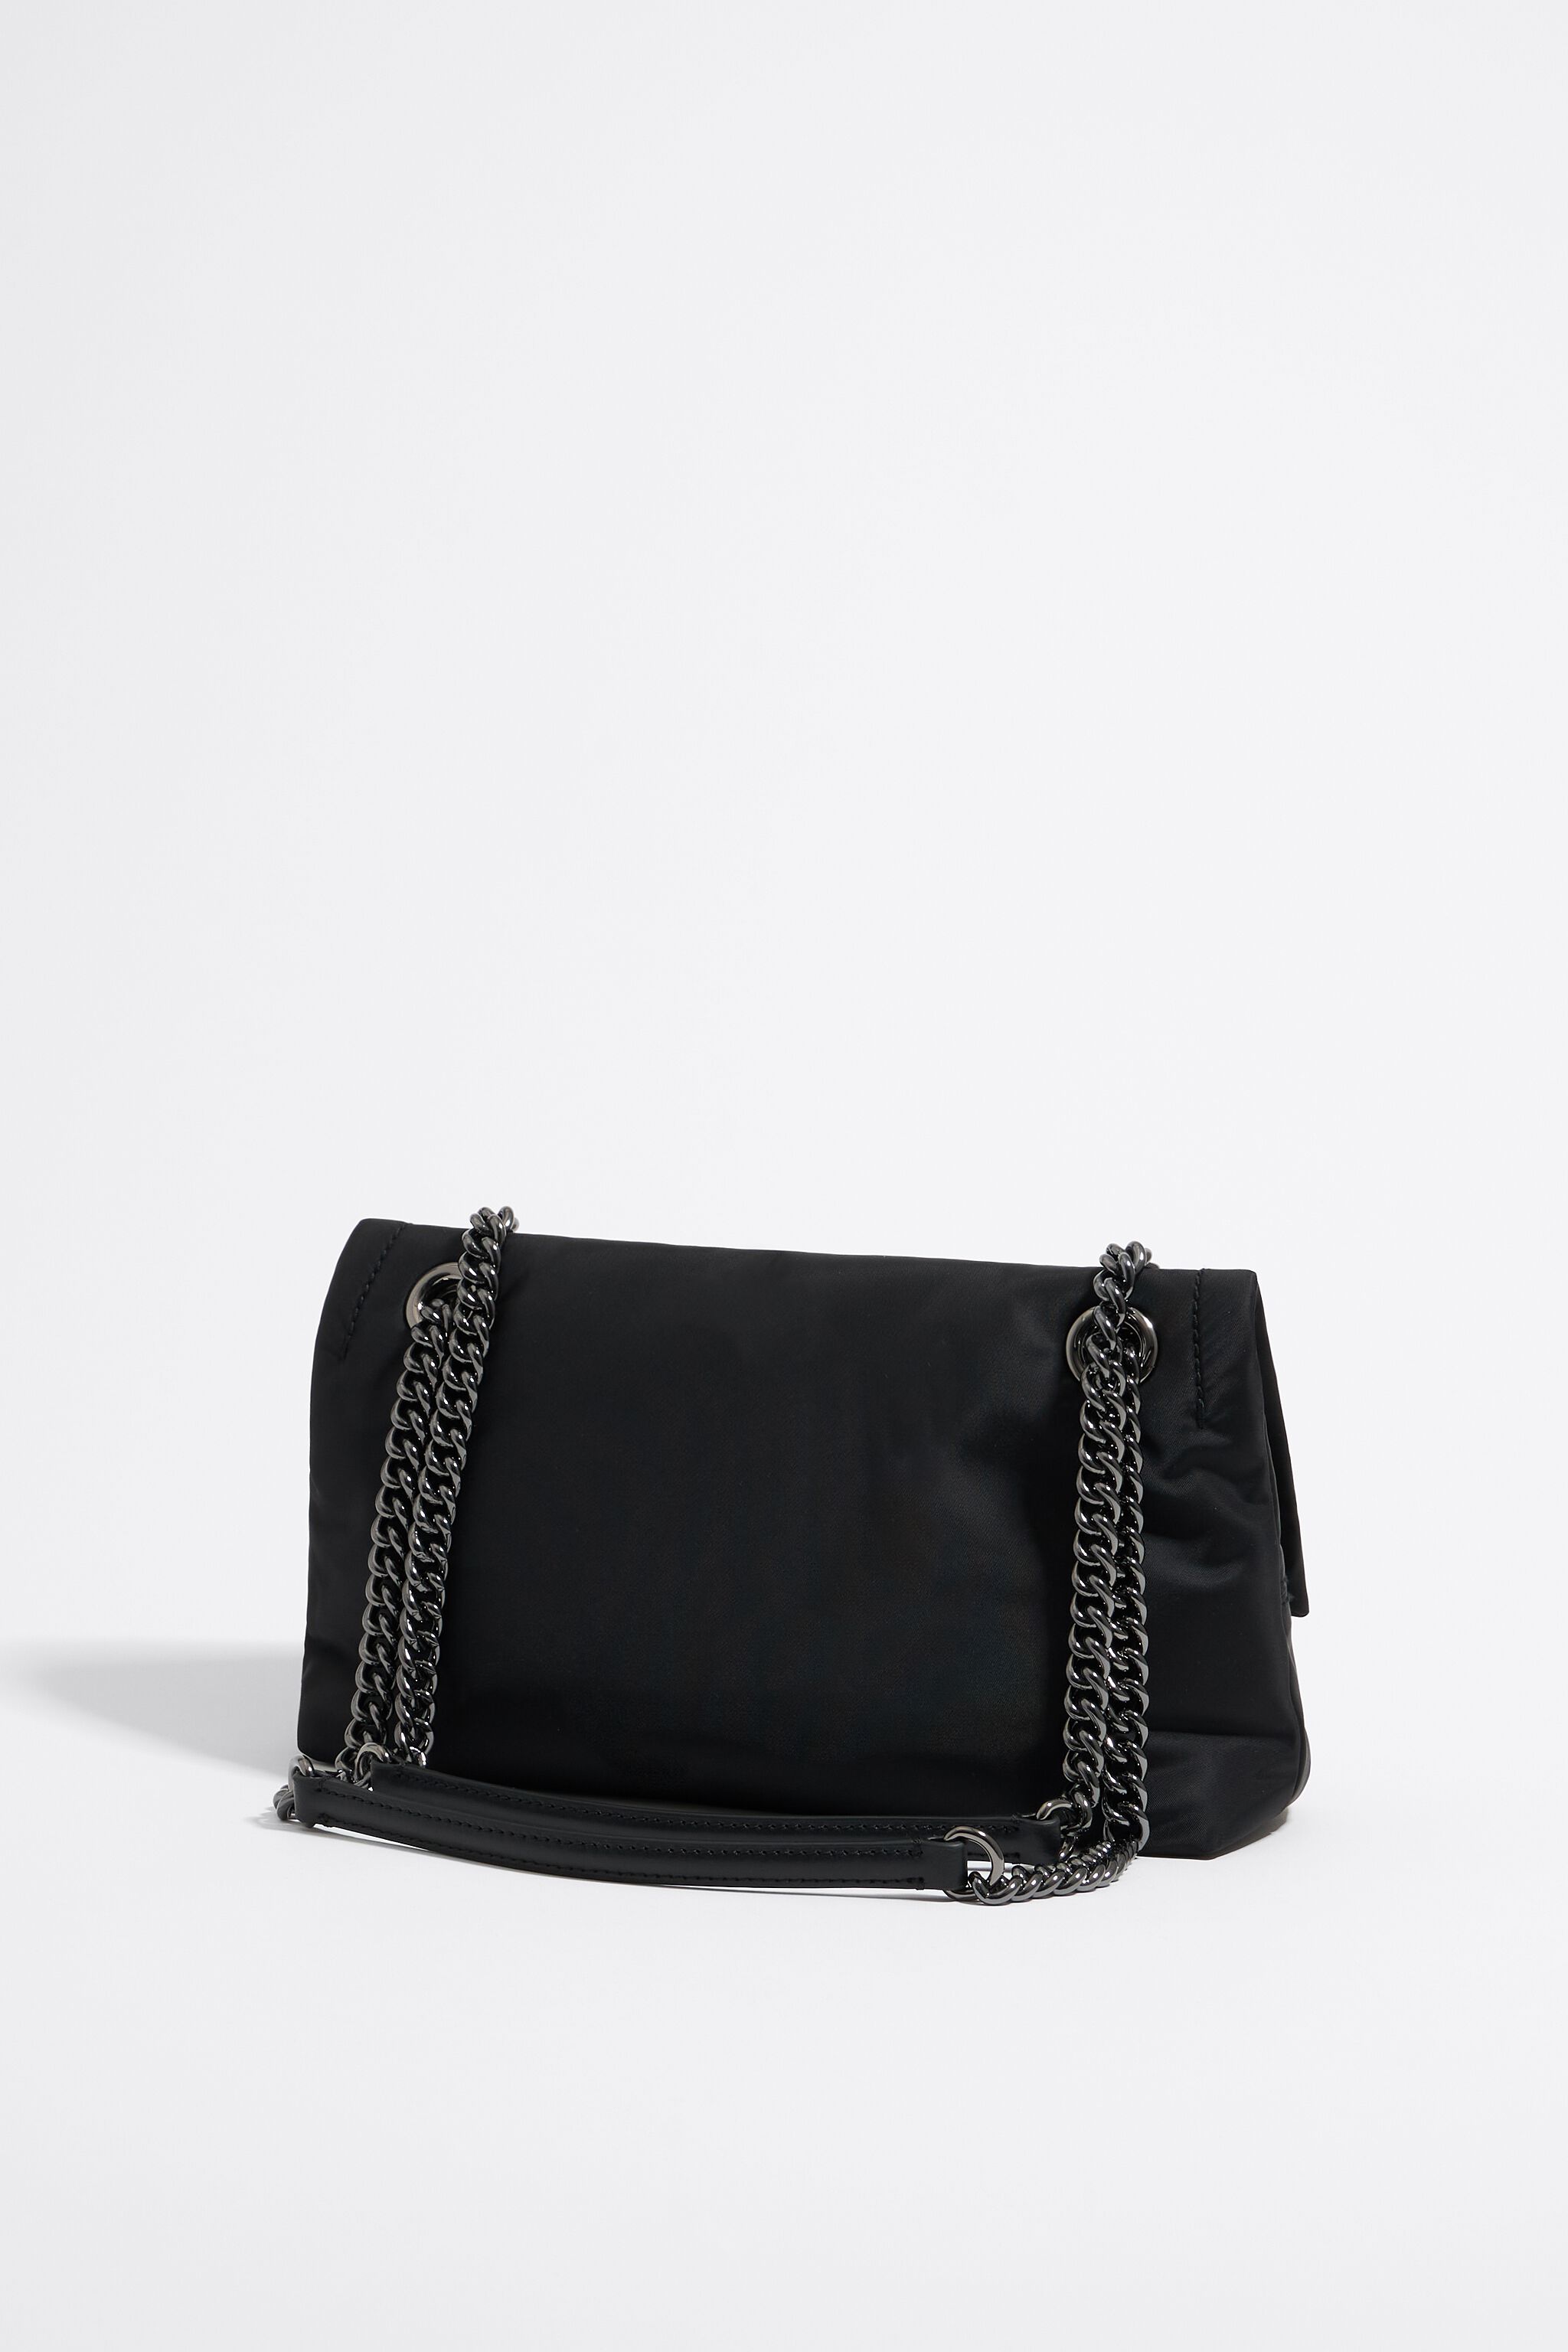 Medium black nylon flap bag